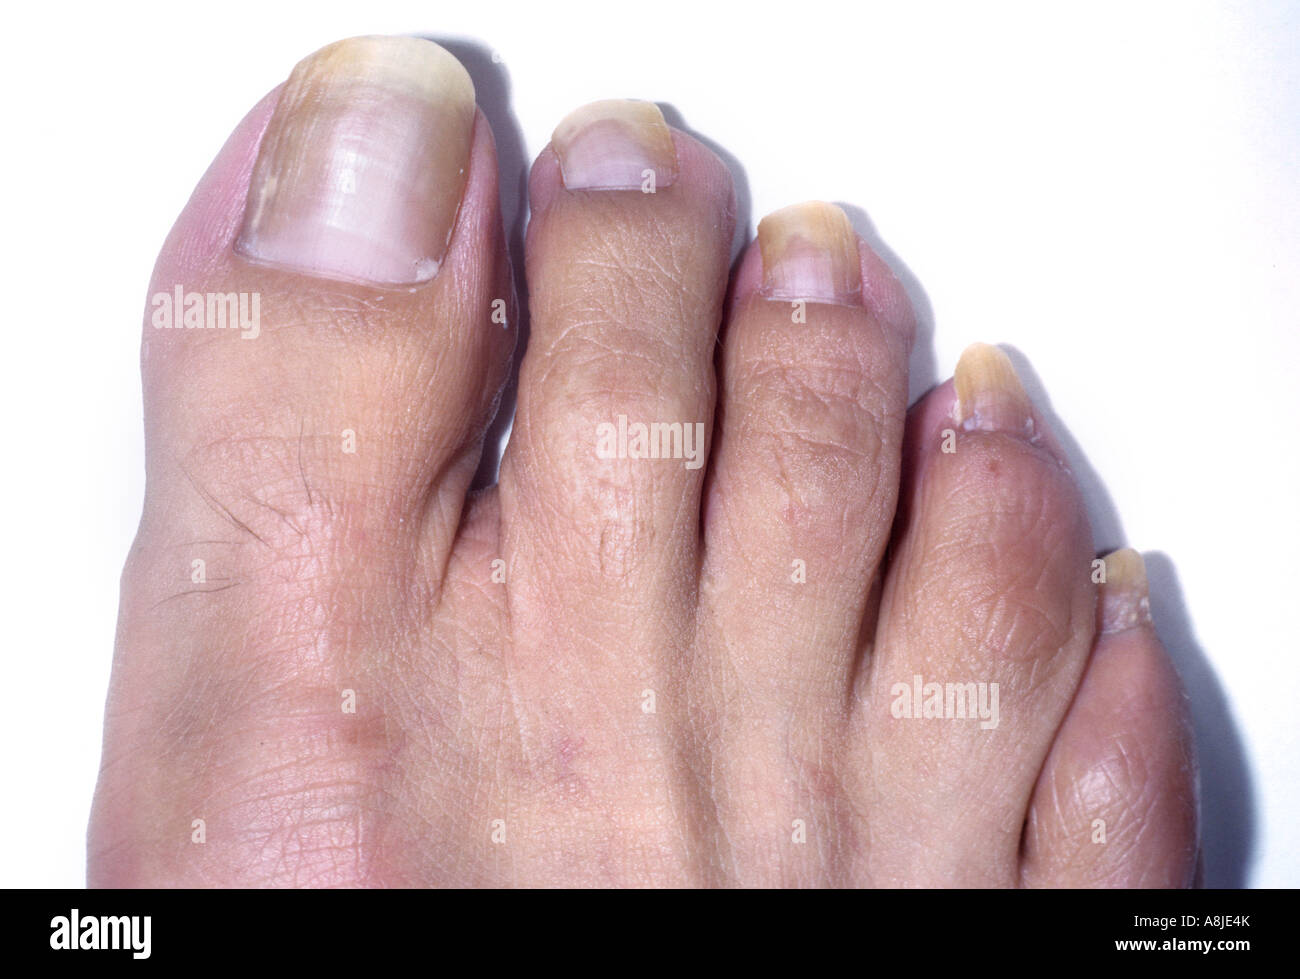 https://c8.alamy.com/comp/A8JE4K/tinea-unguium-effecting-the-toe-nails-diagnosis-onychomycosis-A8JE4K.jpg